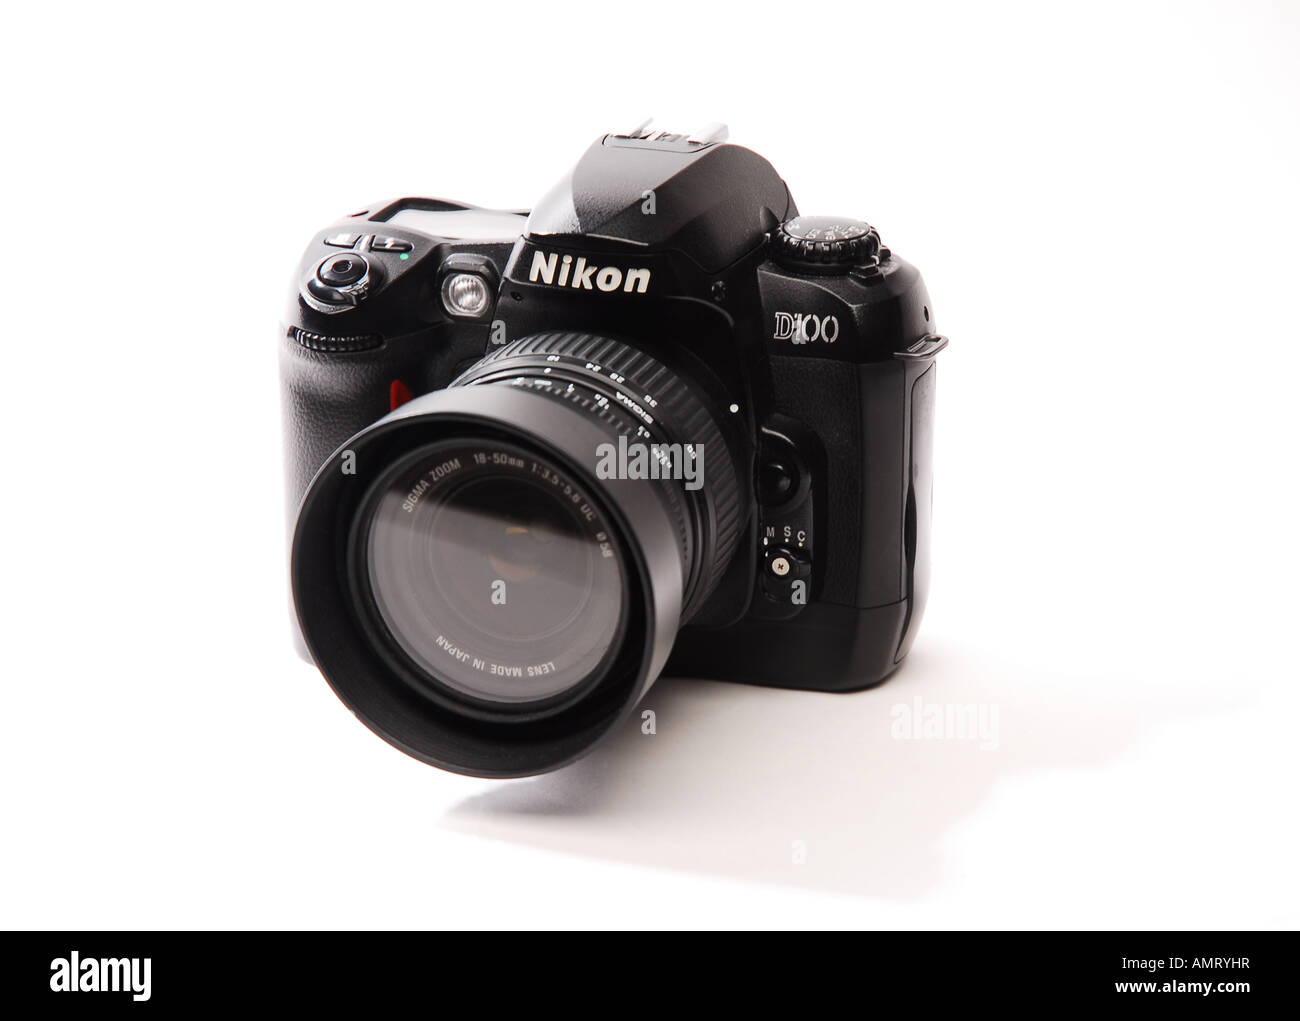 Nikon d100 hi-res stock photography and images - Alamy